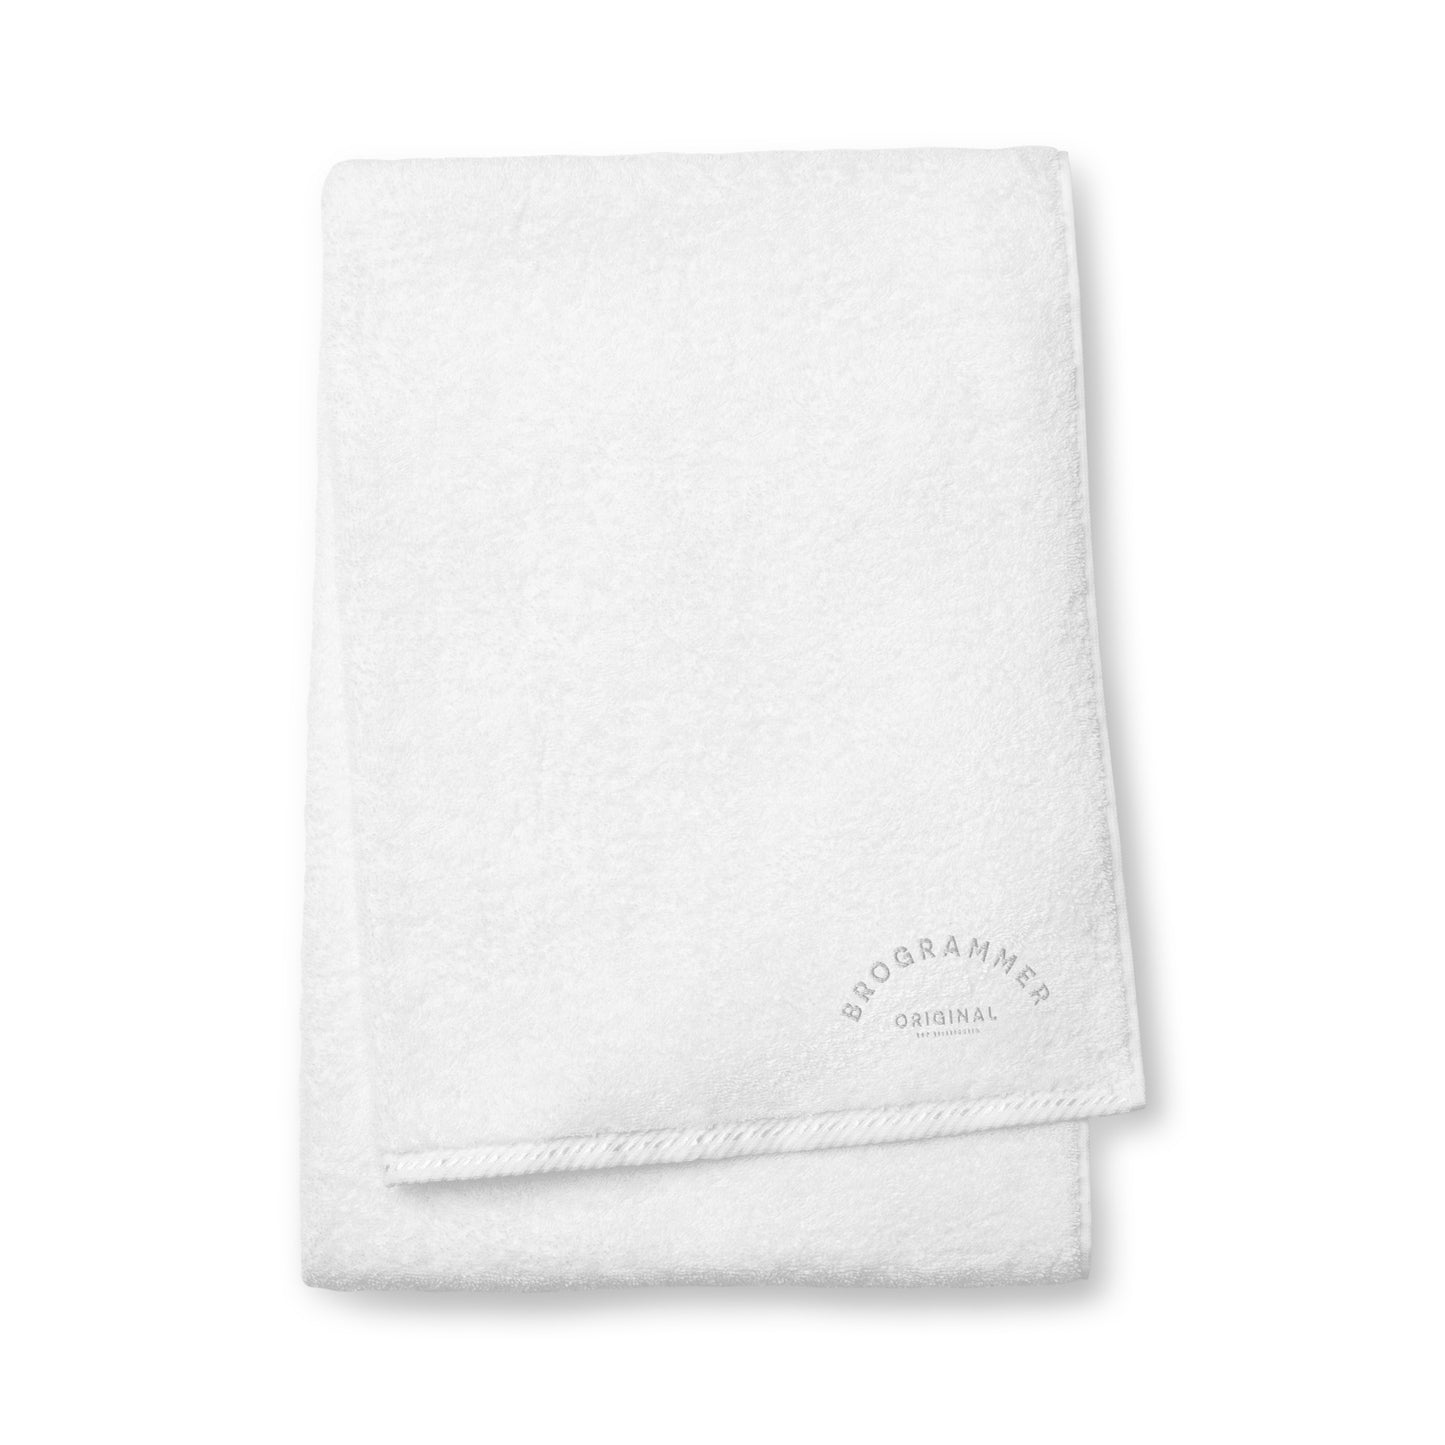 Brogrammer original cotton towel